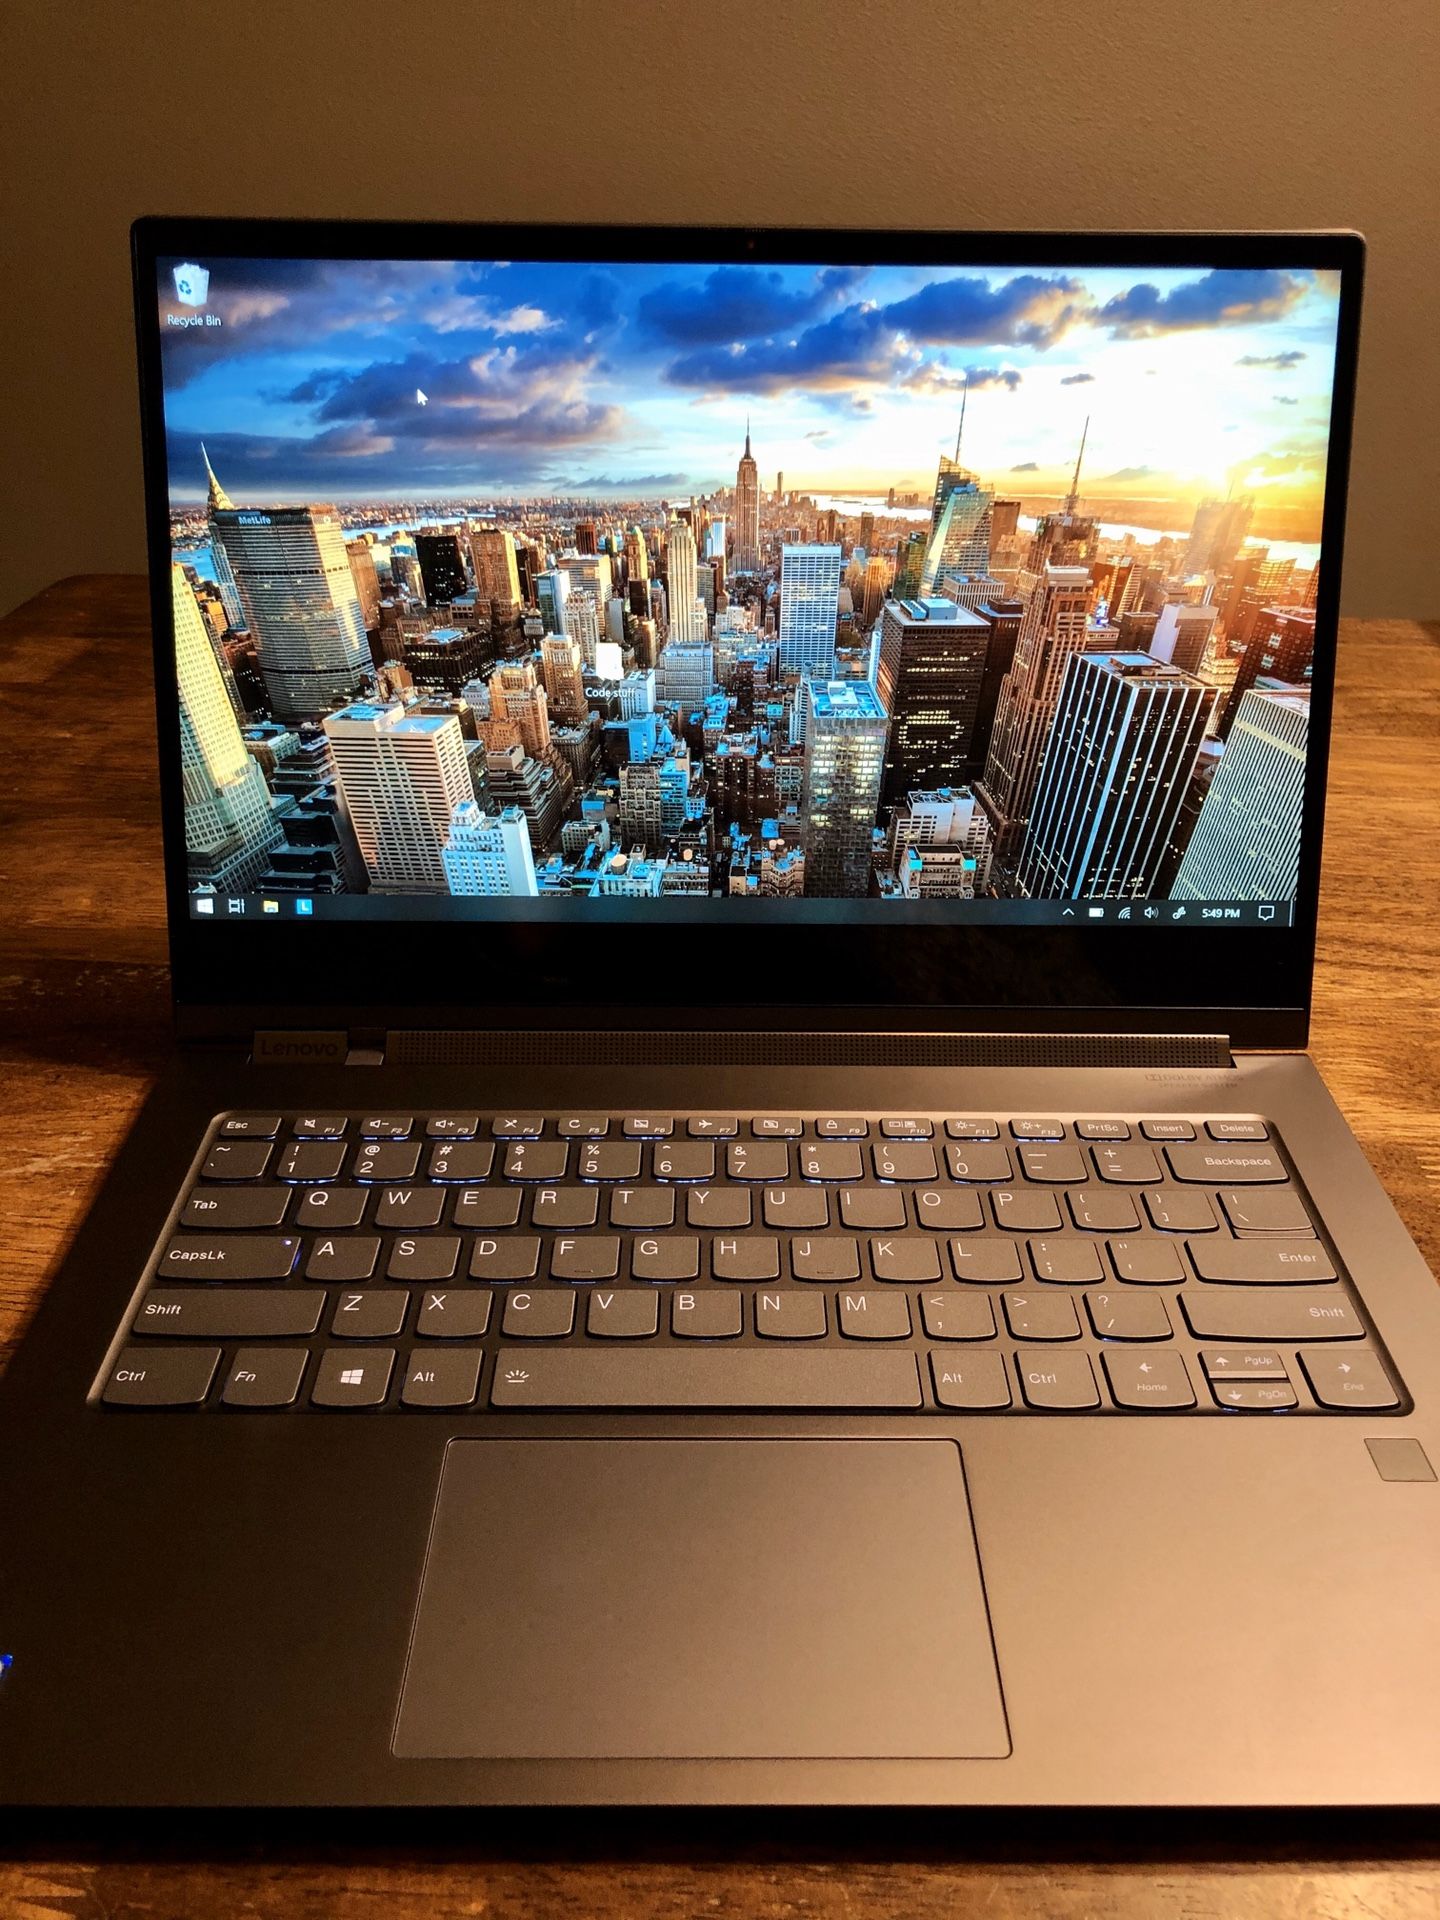 2019 Lenovo Yoga C930 2-in-1 13.9" FHD Touch-Screen Laptop - Intel i7, 12GB DDR4, 256GB PCIe SSD, 2x Thunderbolt 3, Windows 10, Iron Gray